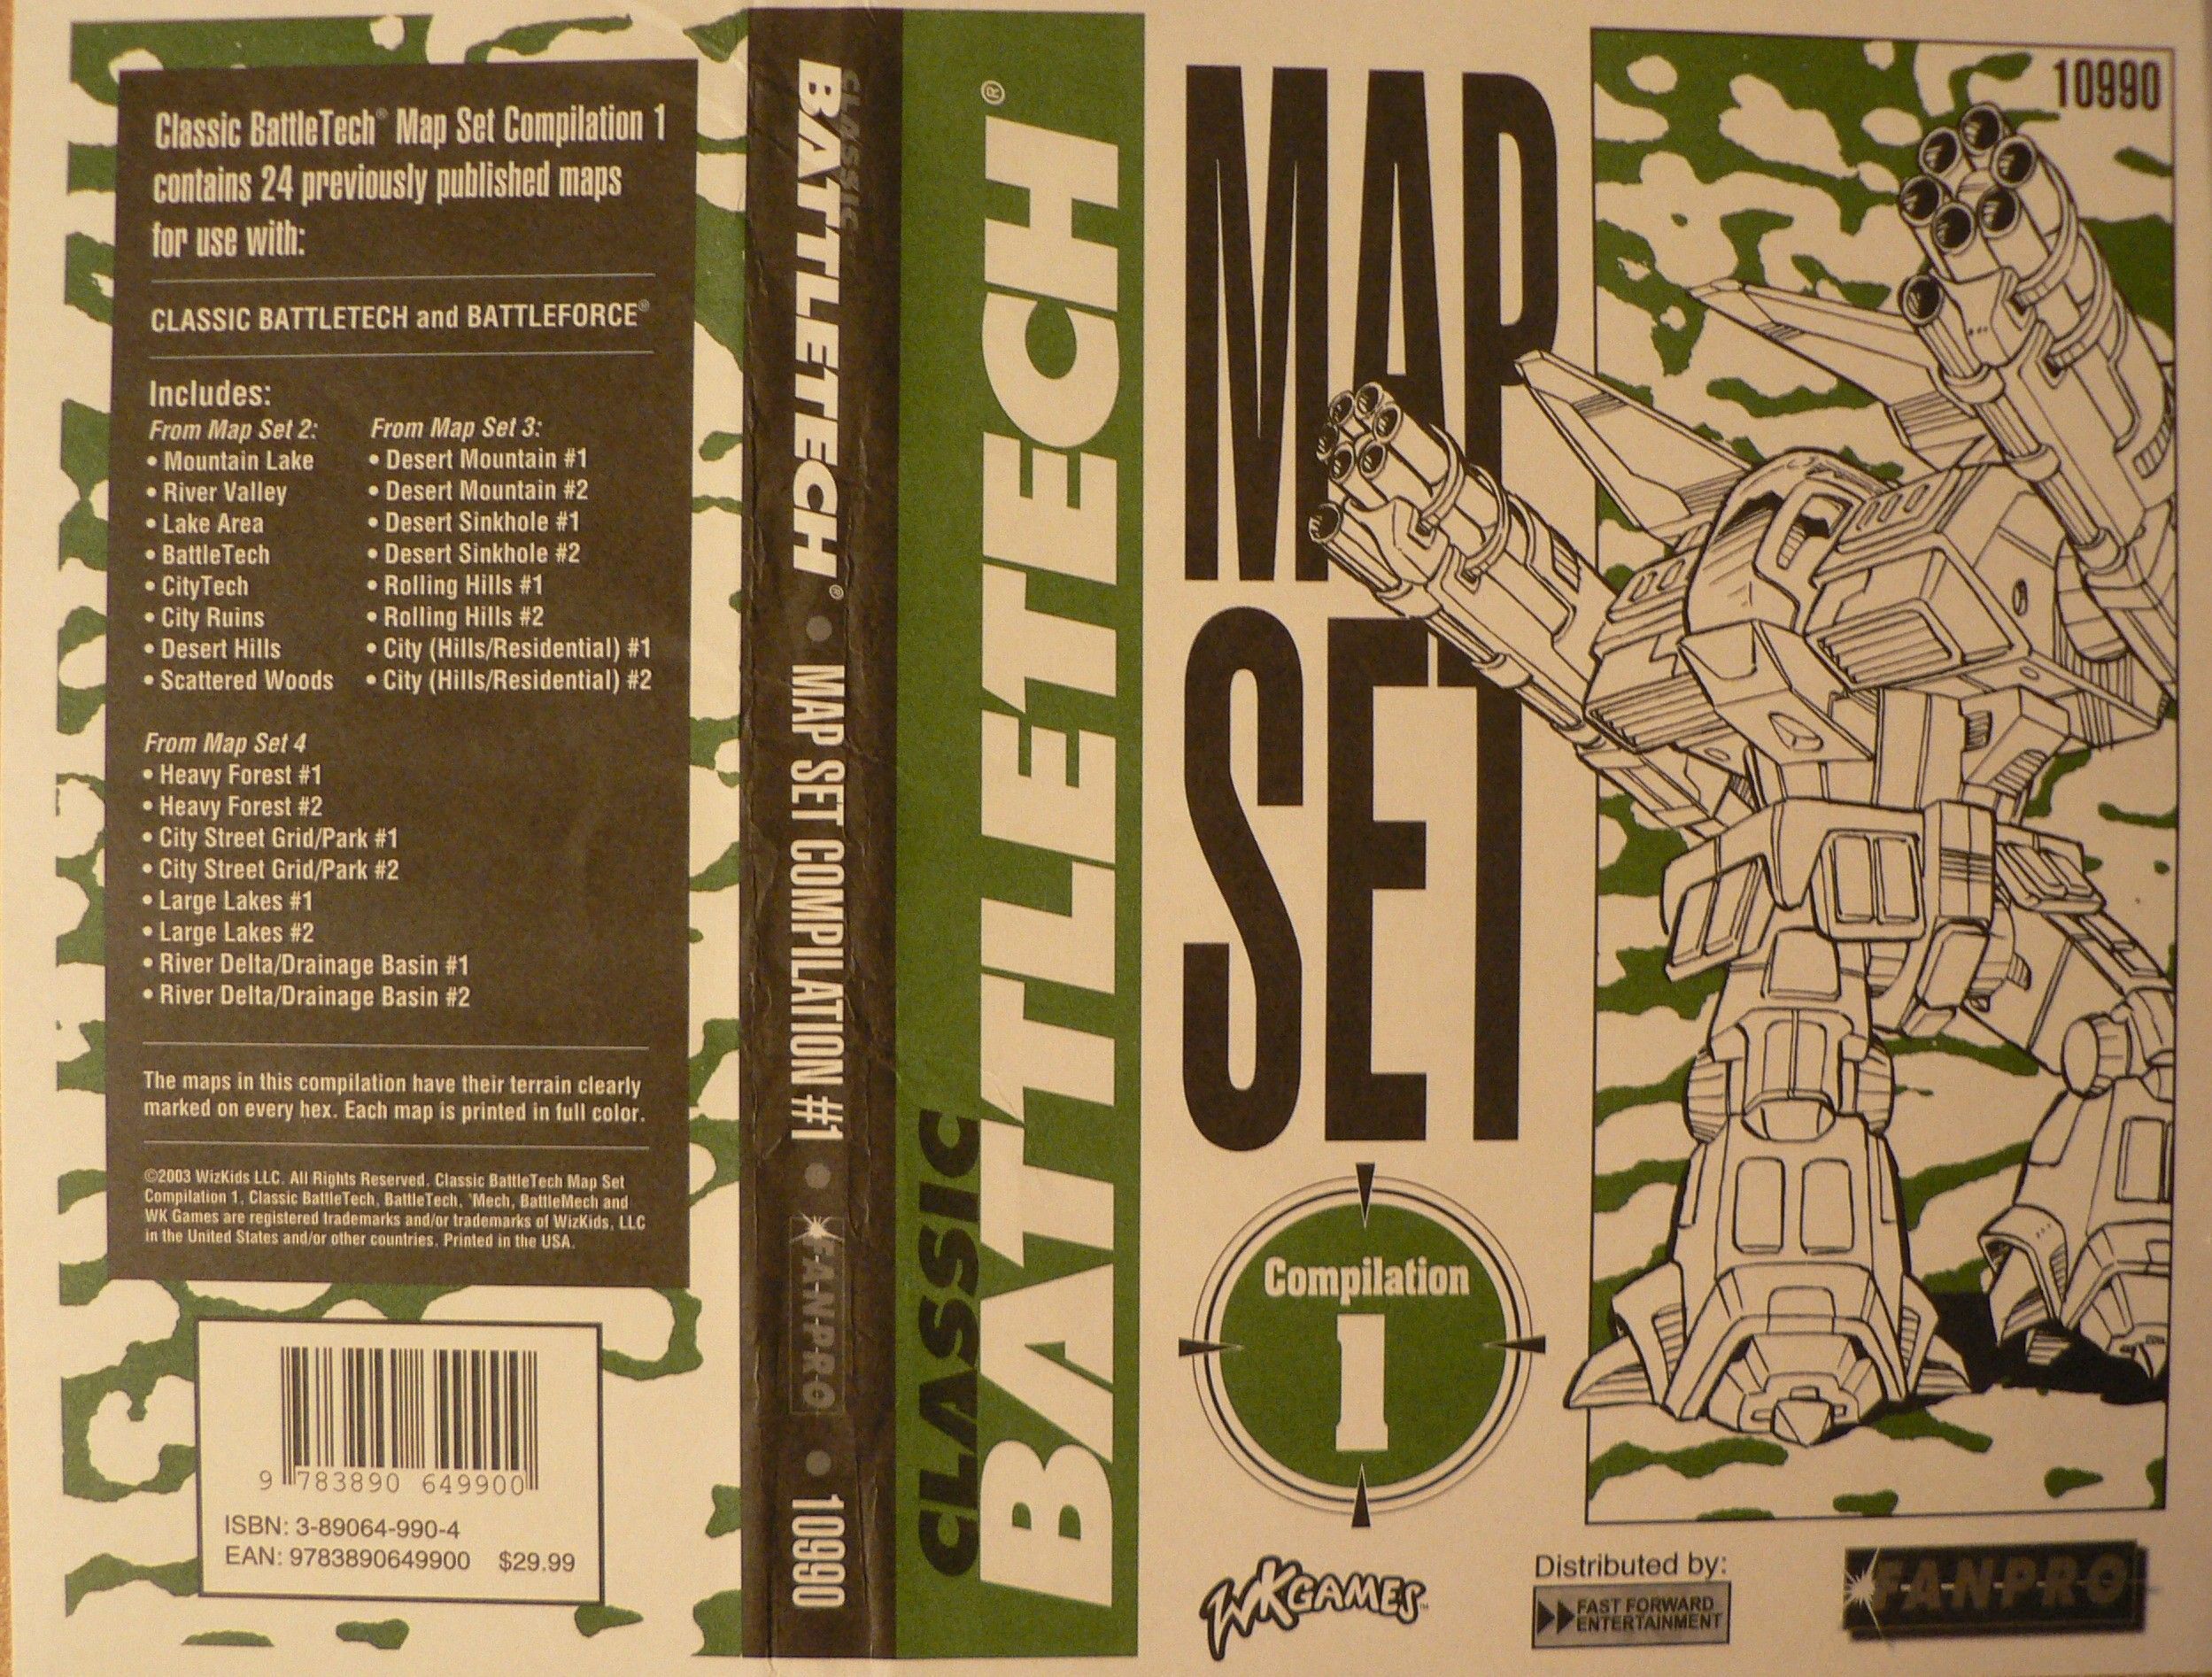 Classic Battletech Map Compilation 1